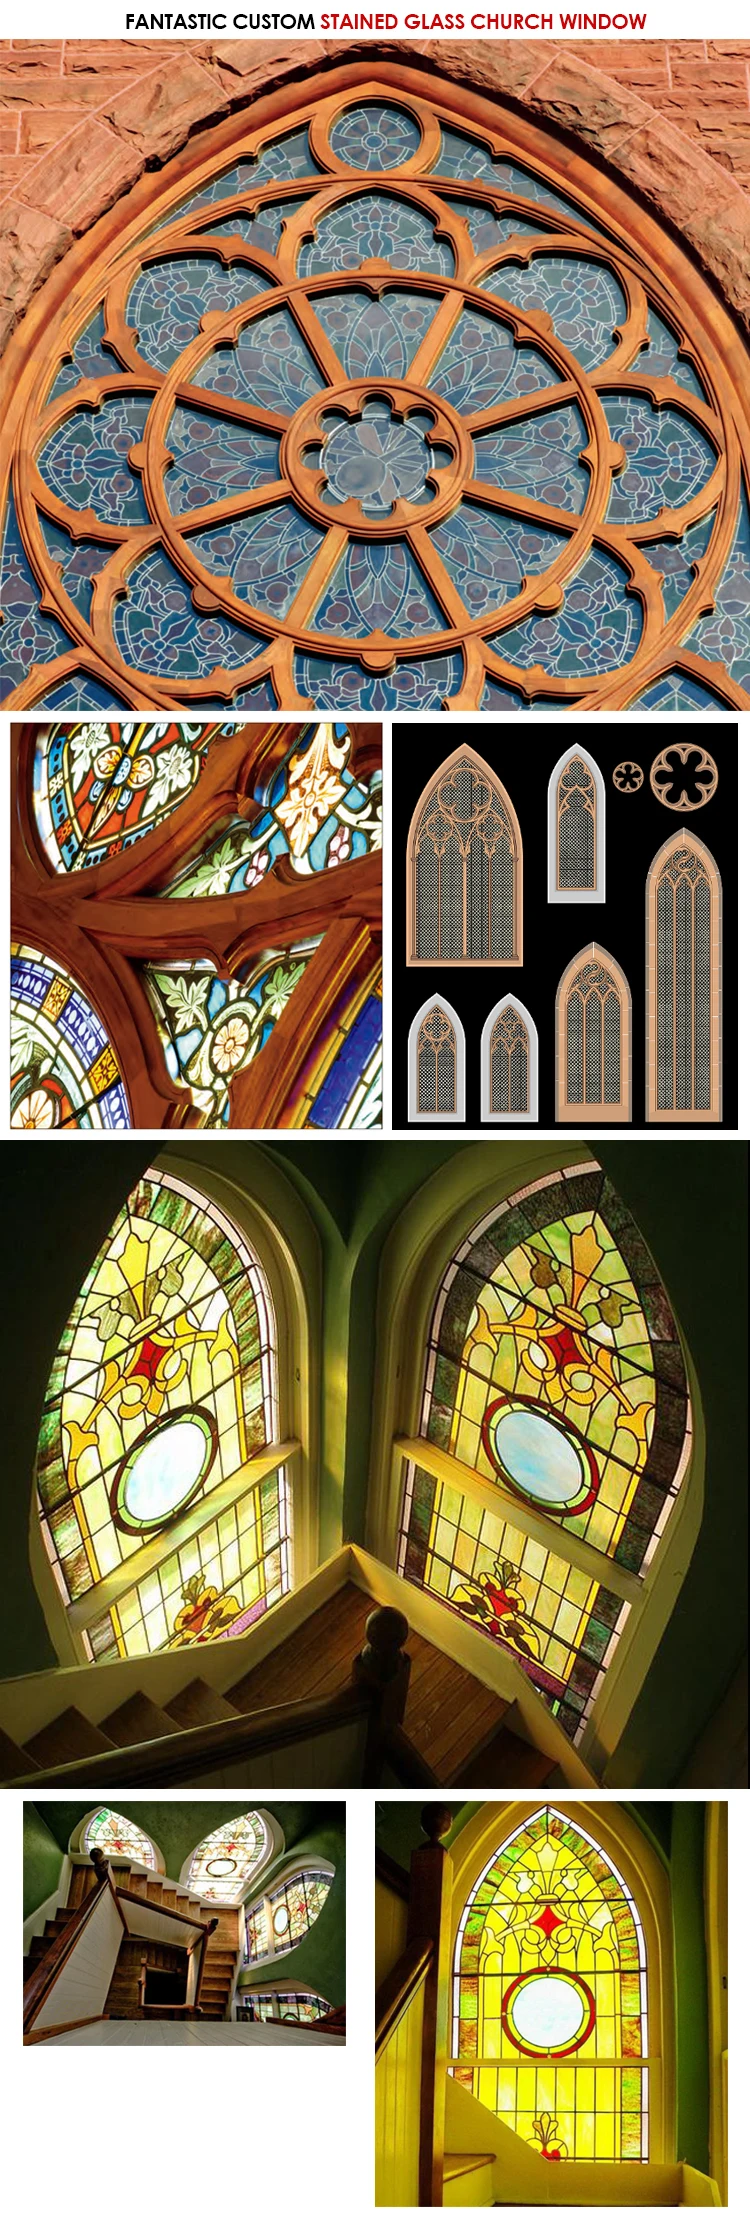 Catholic stained glass windows church